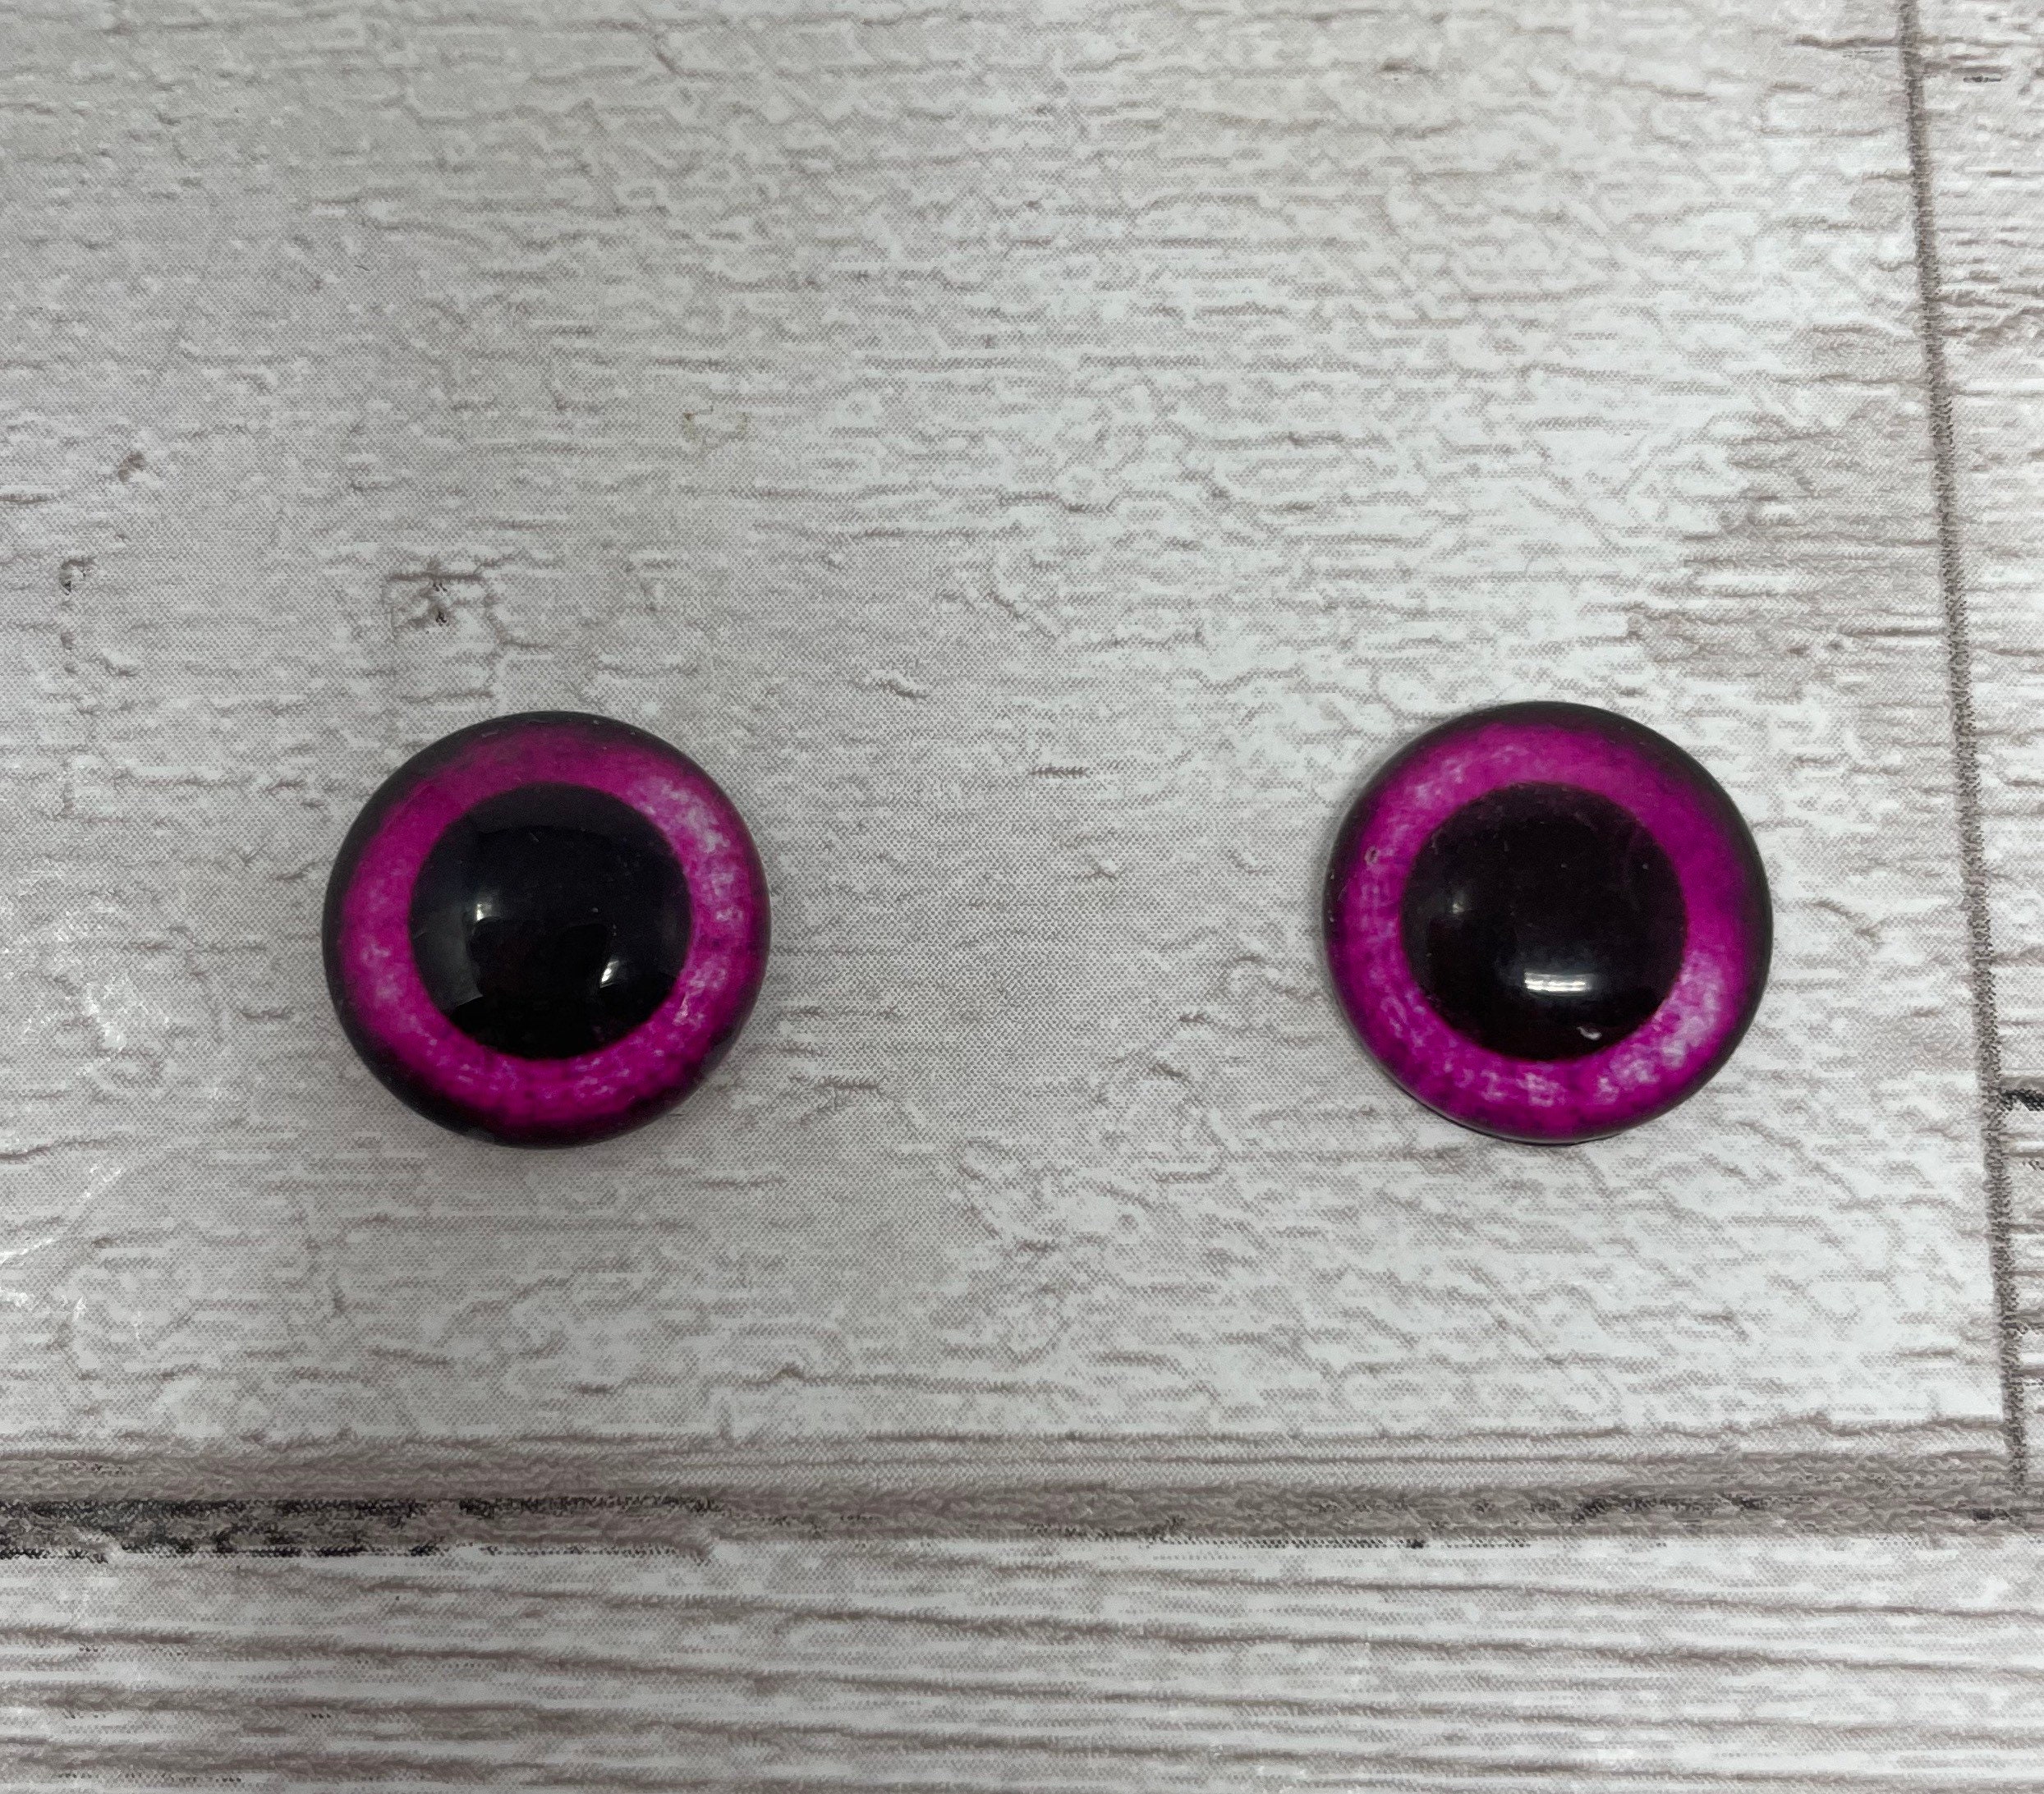 12 mm Red / Pink Albino eyes for Amigurumi Animal eyes Plastic eyes Safety  eyes - 5 PAIRS (12PR)